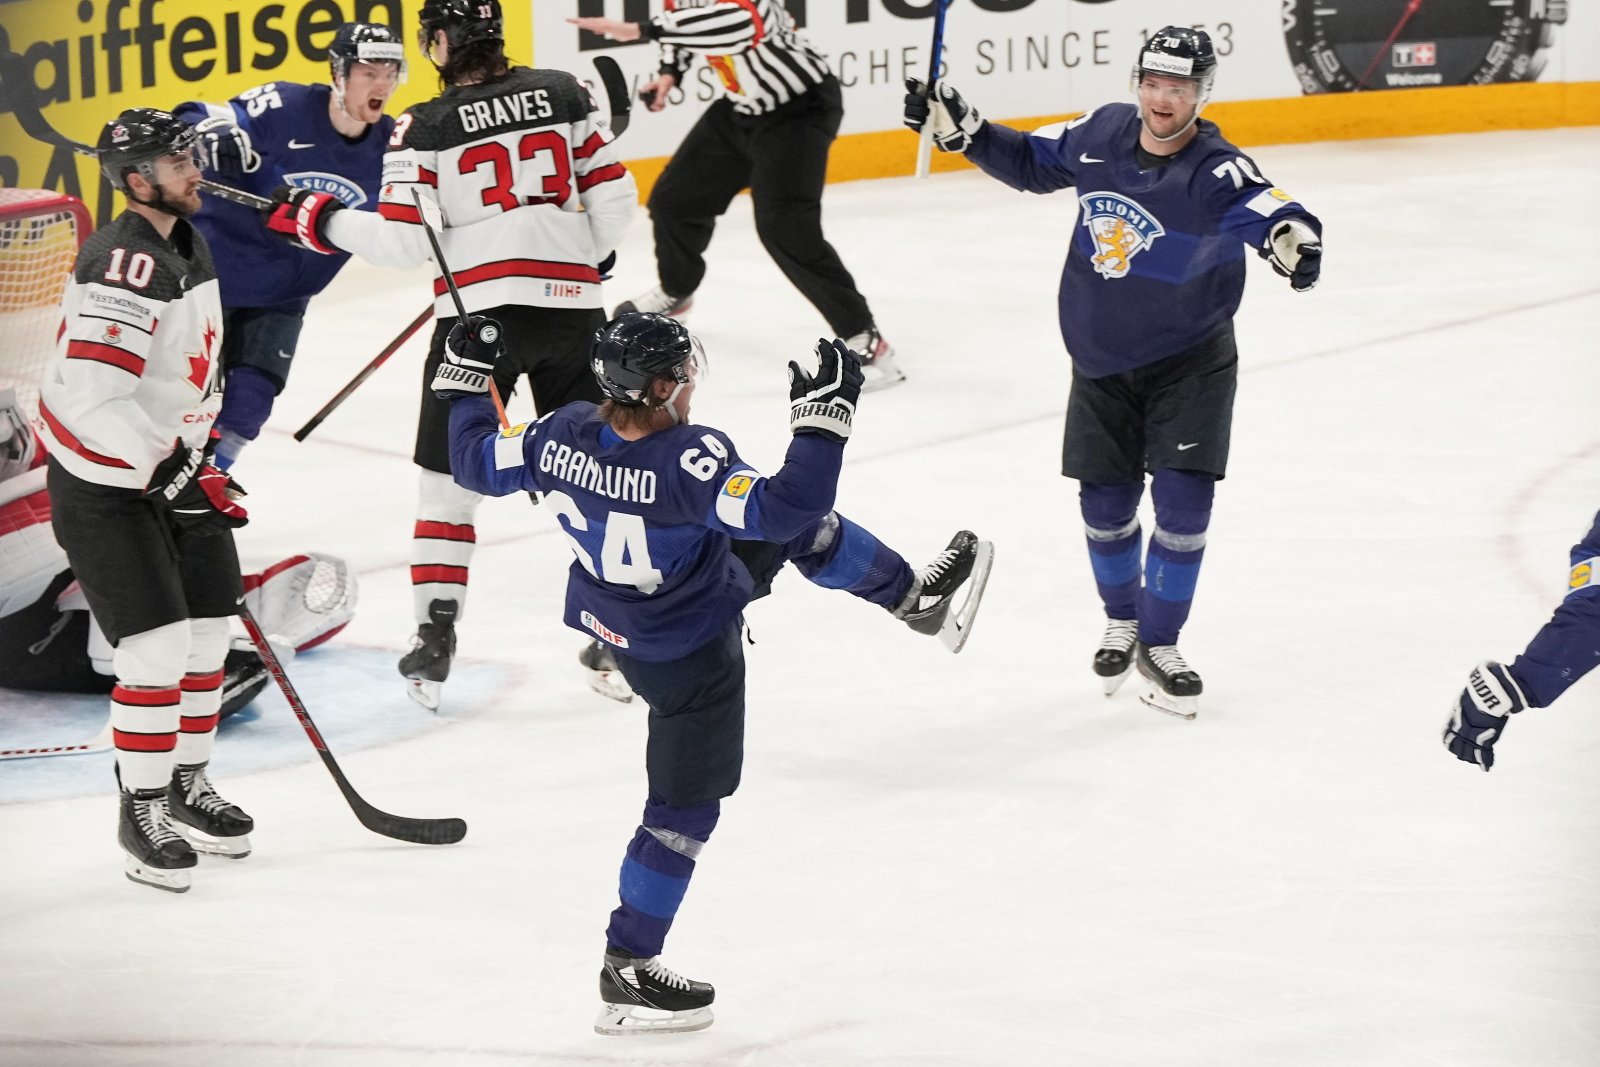 Hokejisti Fínska získali zlaté medaily na MS 2022. Zdolali Kanadu zdolali 4:3 po predĺžení